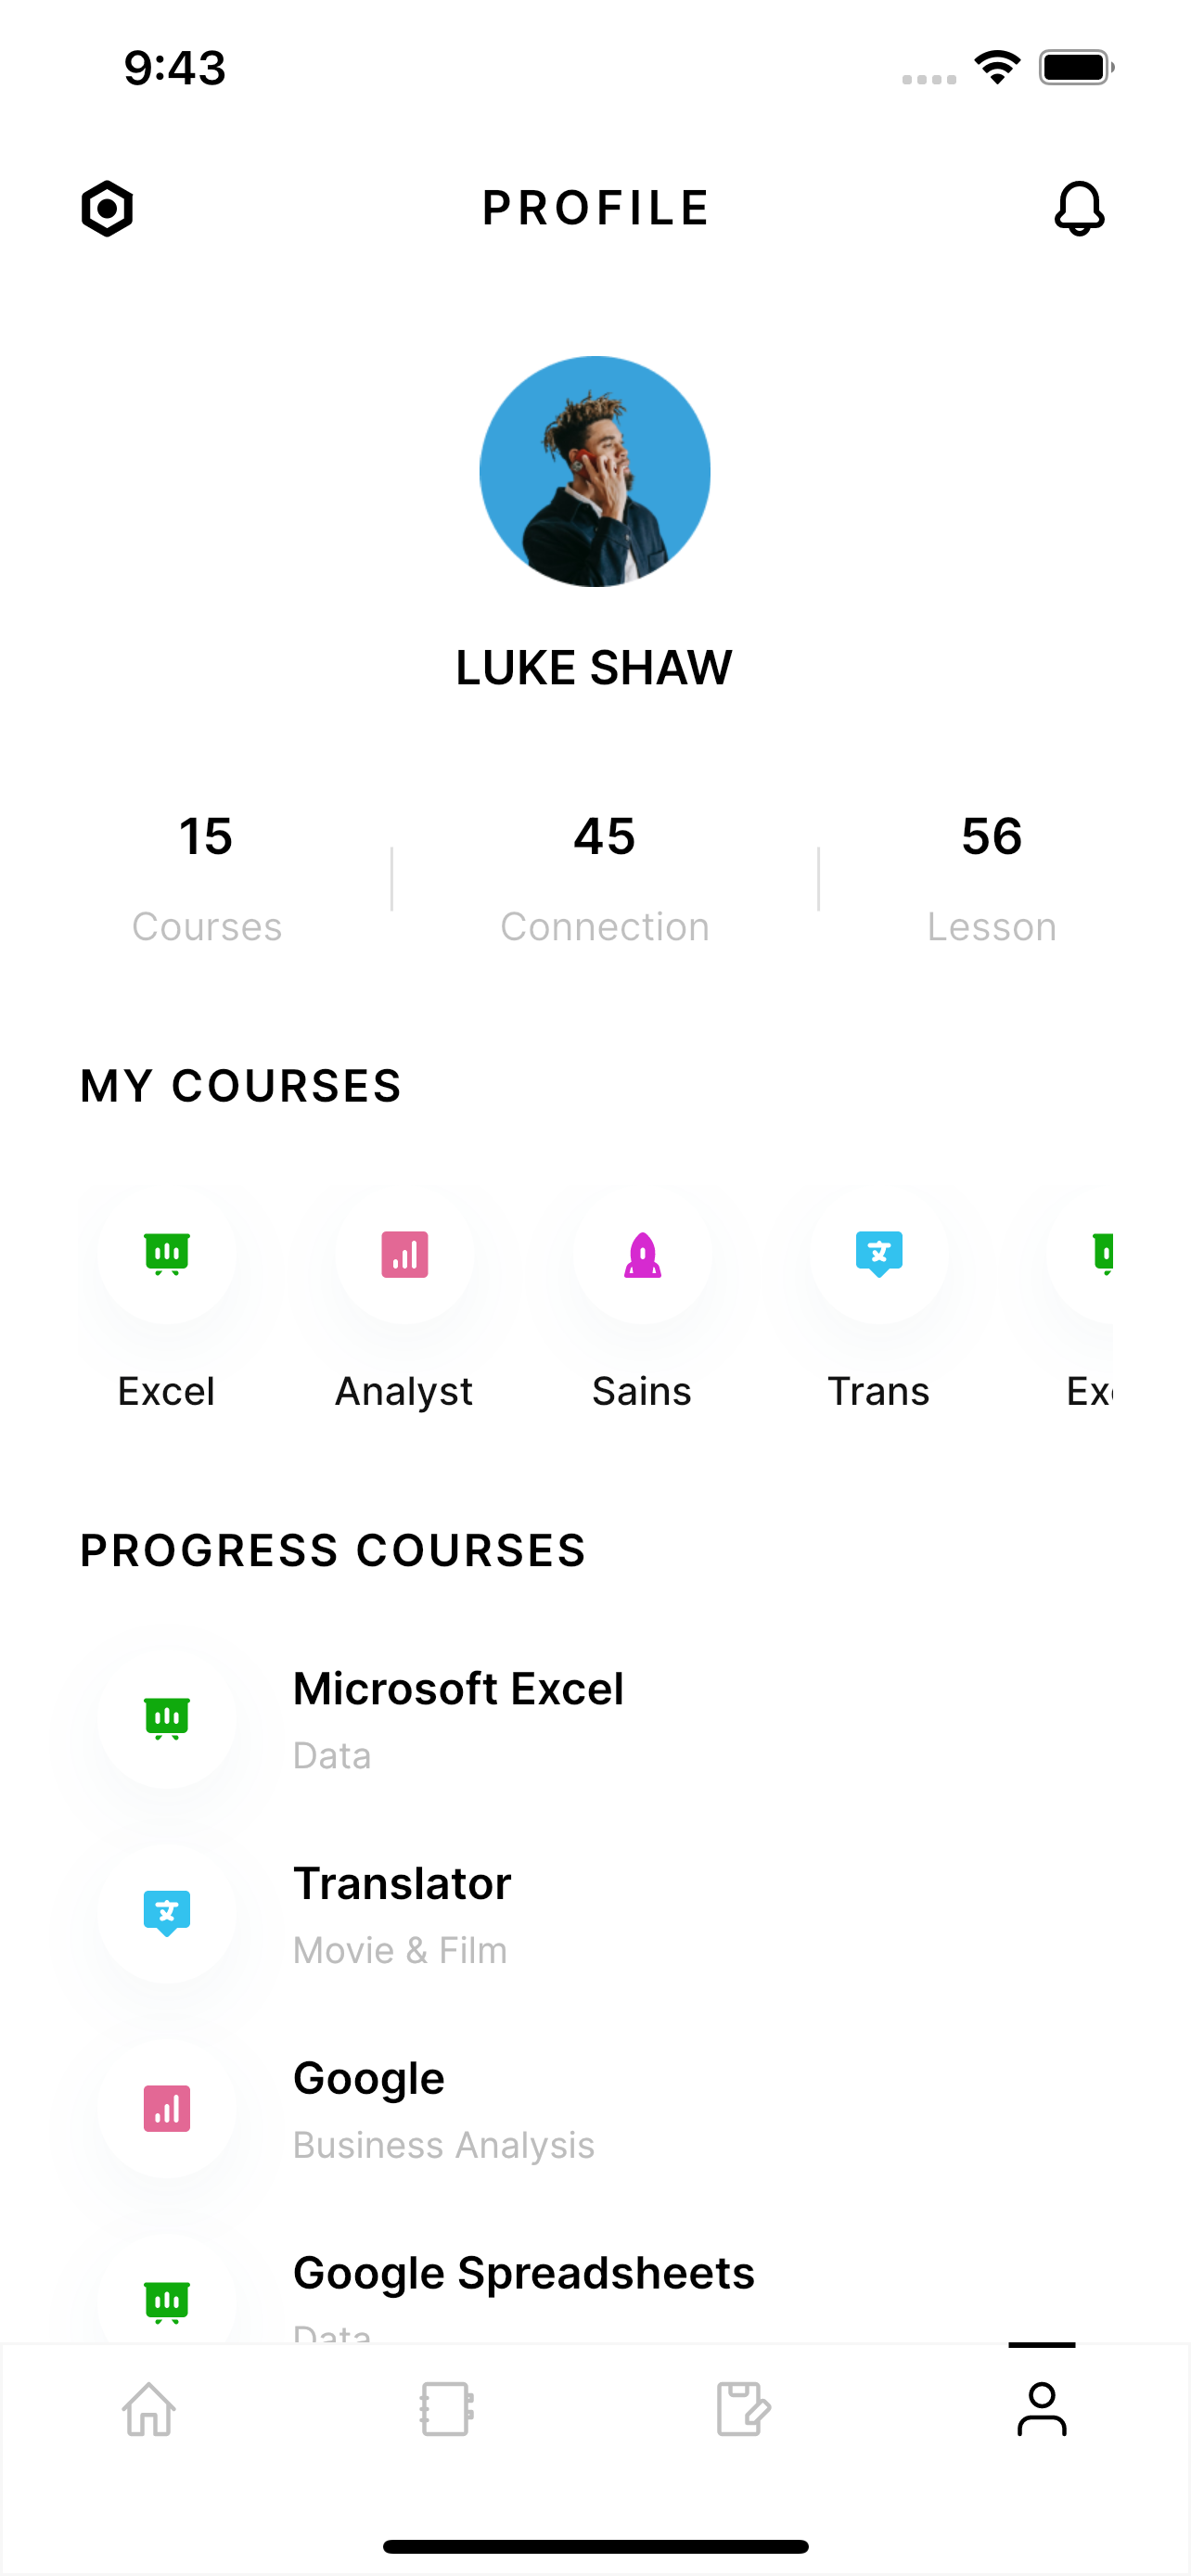 Online Course profile